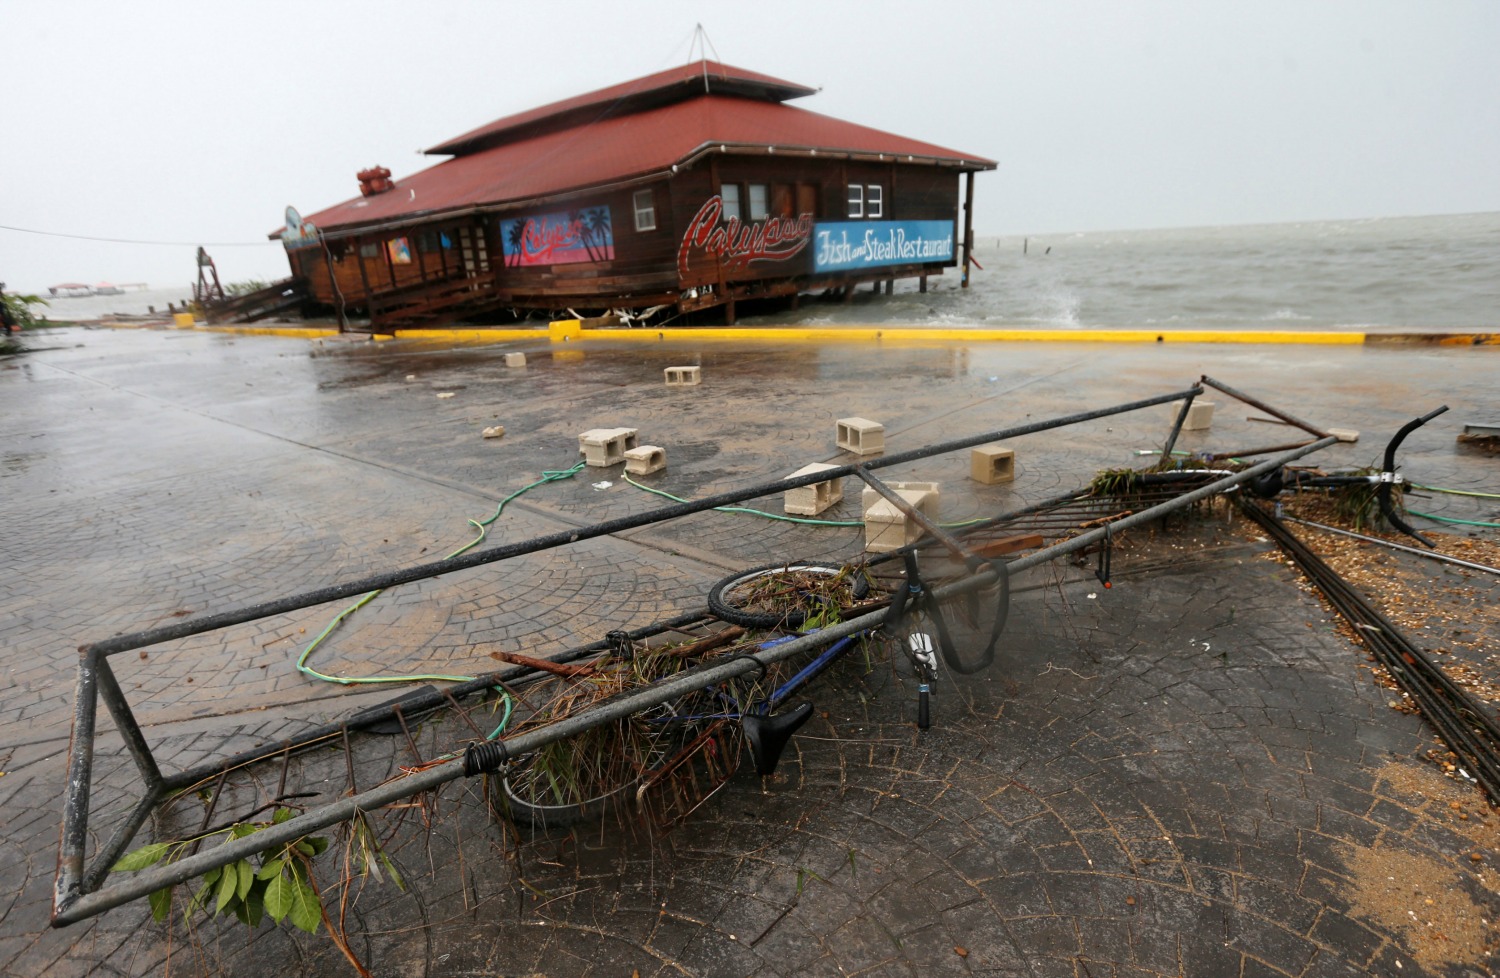 El huracán Earl deja seis muertos antes de convertirse en tormenta tropical